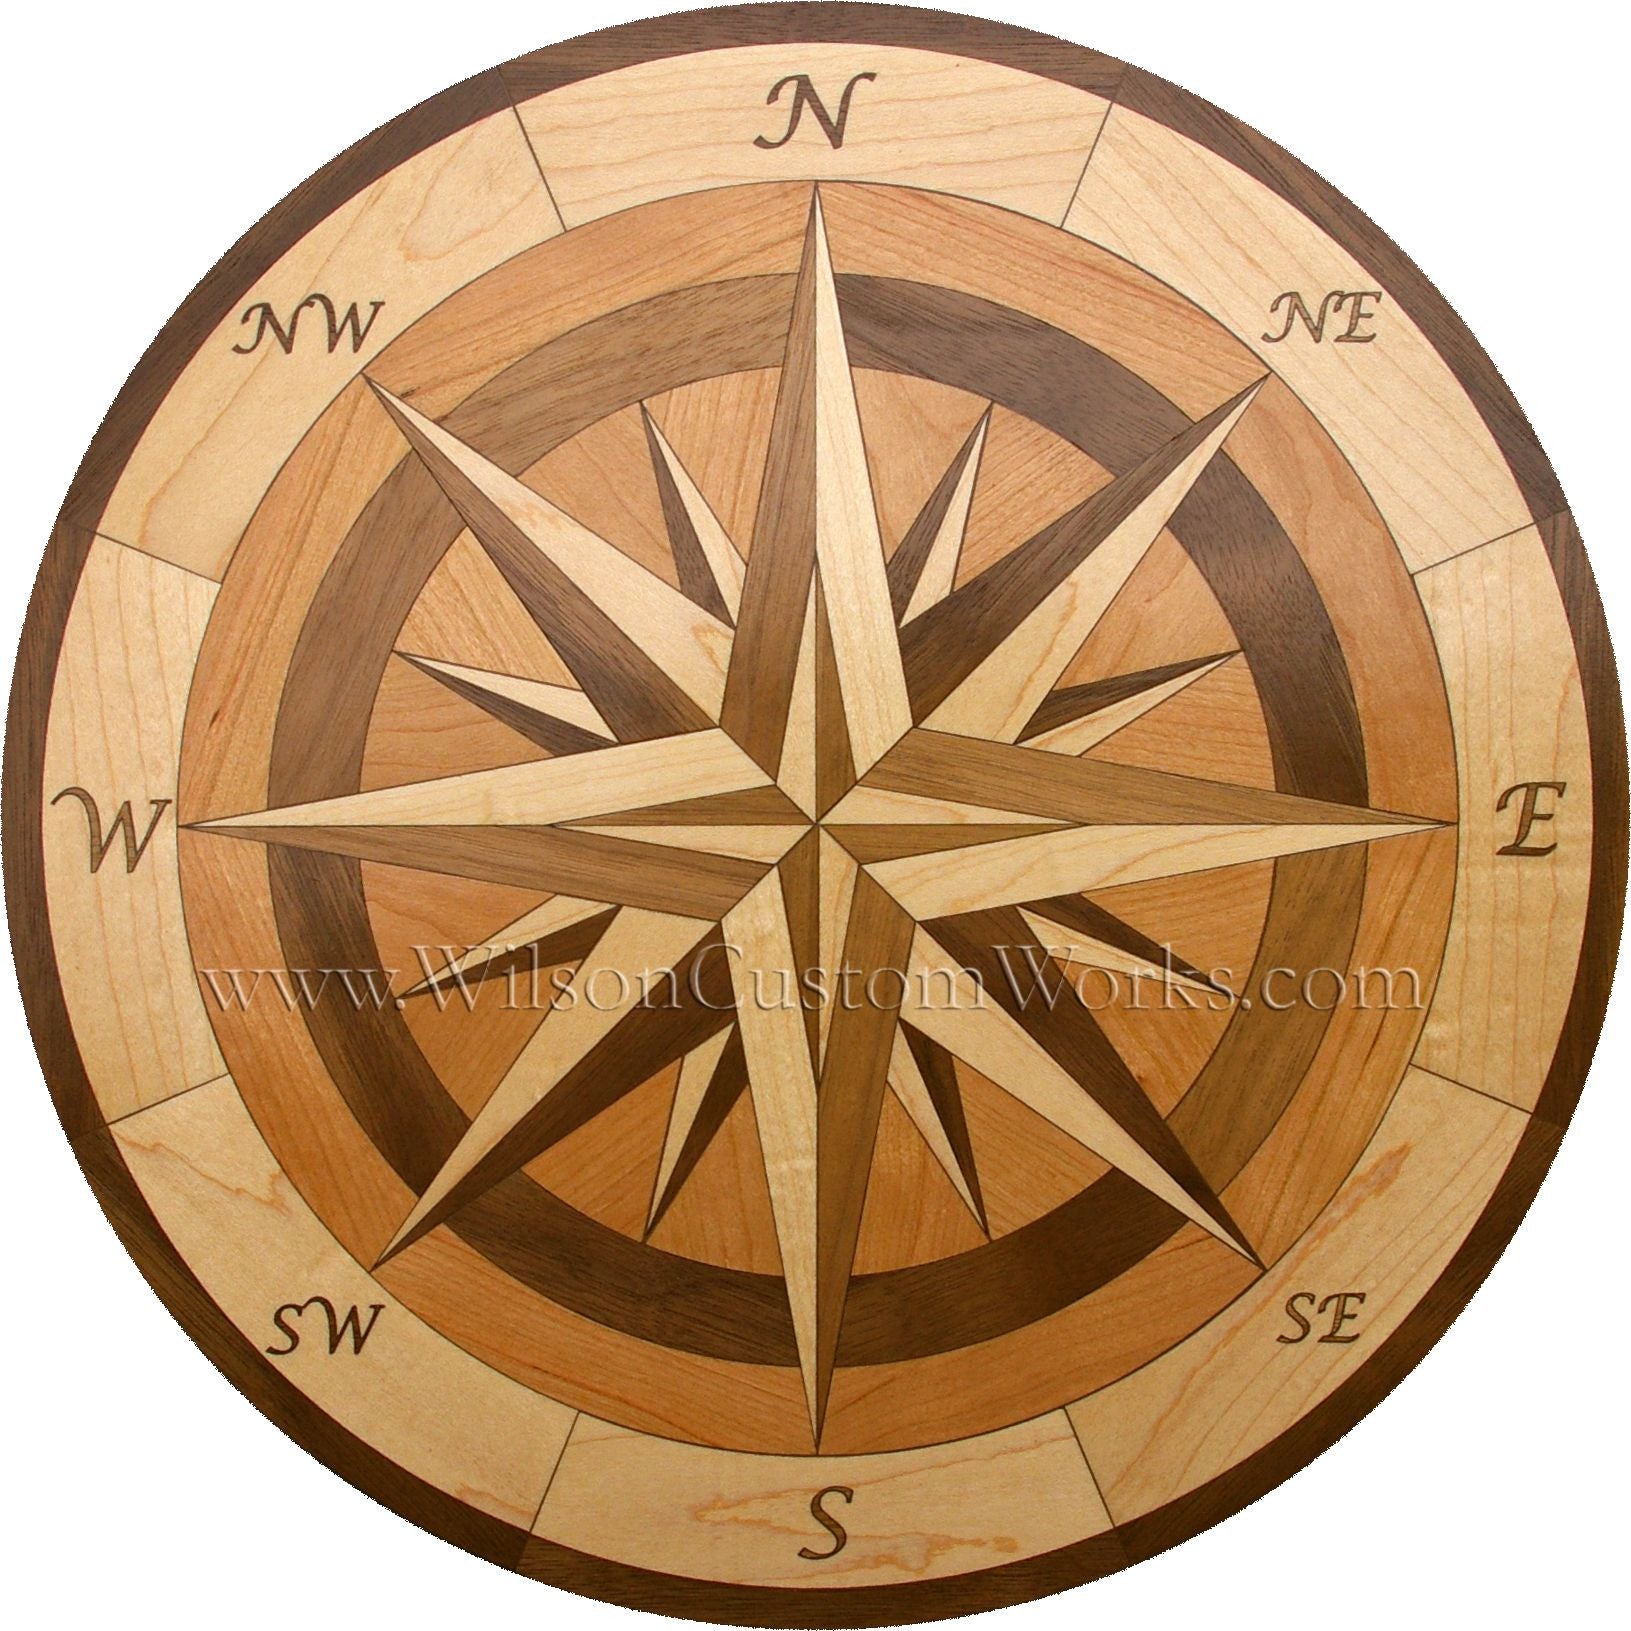 Wilson Custom Works hardwood wood floor inlay medallion compass rose nautical design